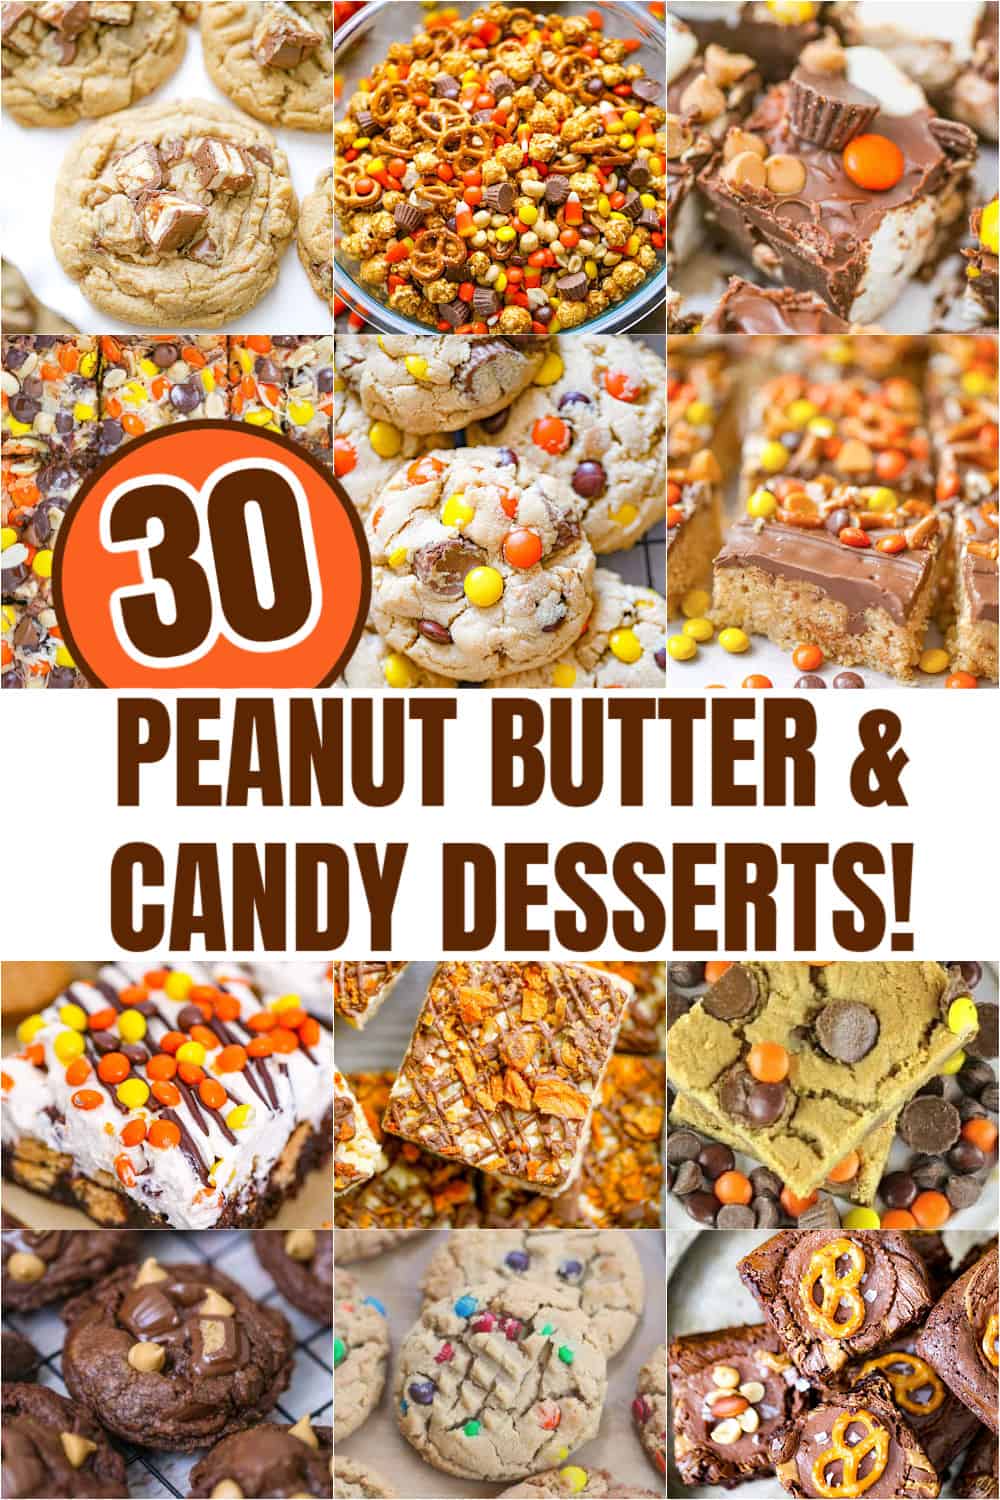 30 Peanut Butter & Candy Desserts